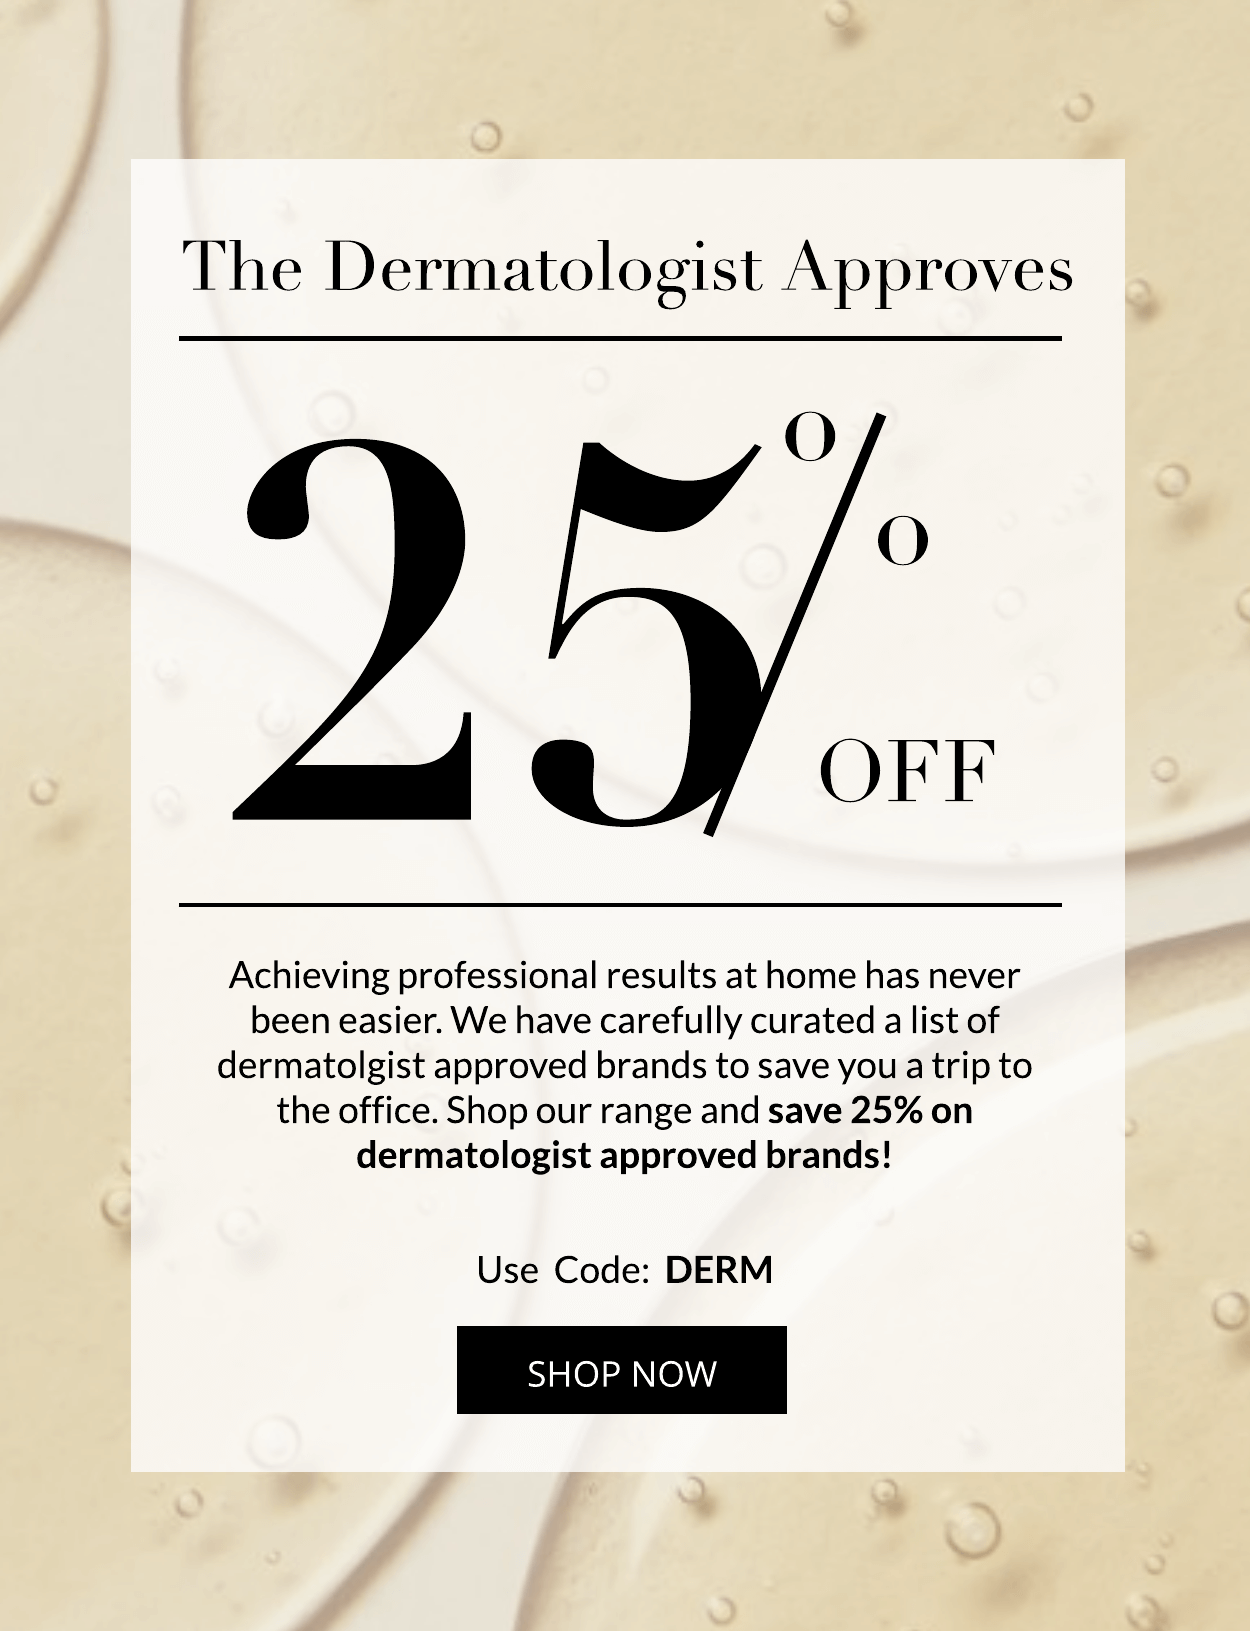 Save 25% on Dermatologist Approved Brands!